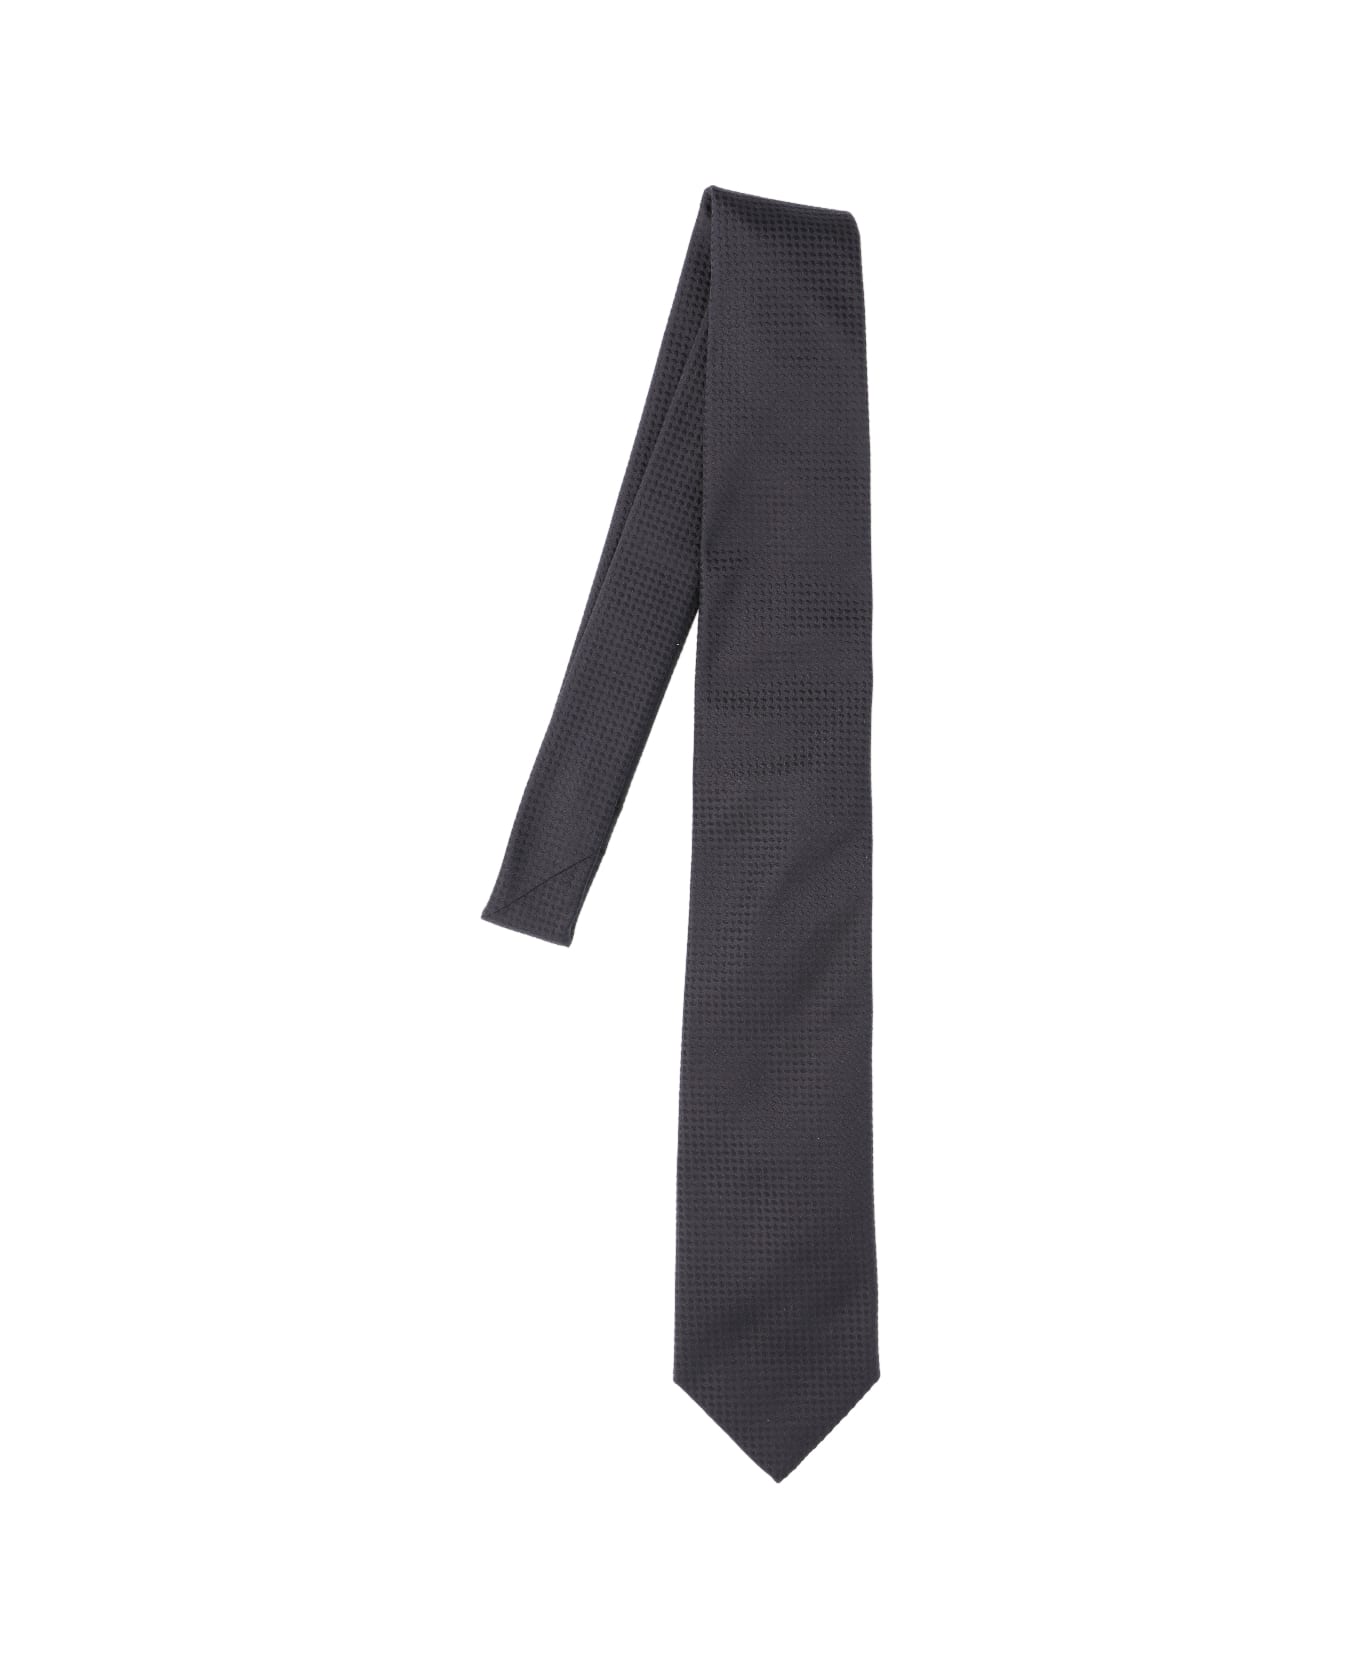 Altea Basic Tie - Black   ネクタイ